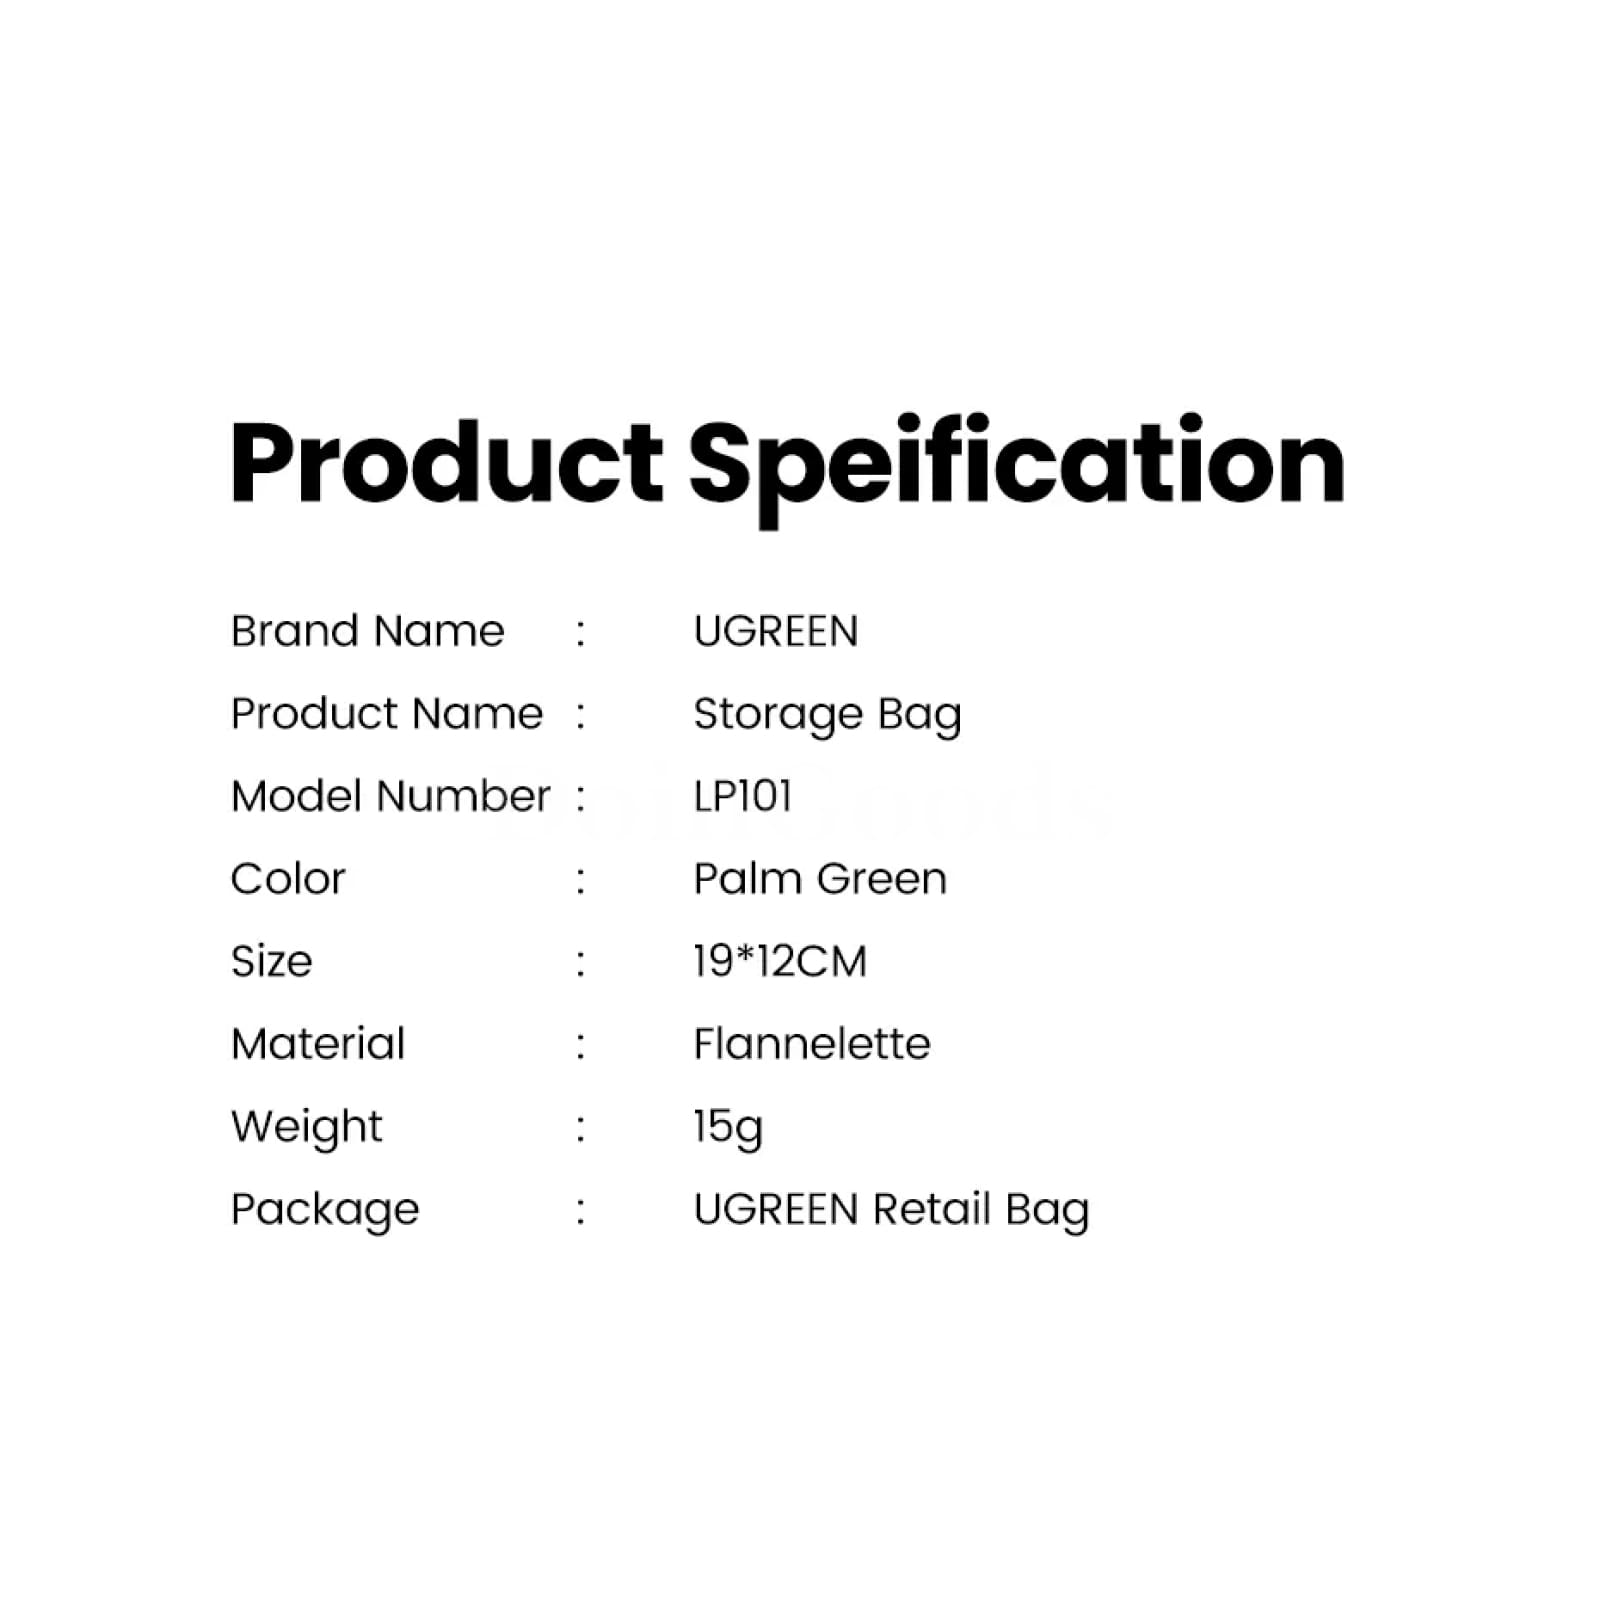 Ugreen Power Bank Case Phone Pouch Waterproof Storage Bag Iphone Samsung Xiaomi 301635